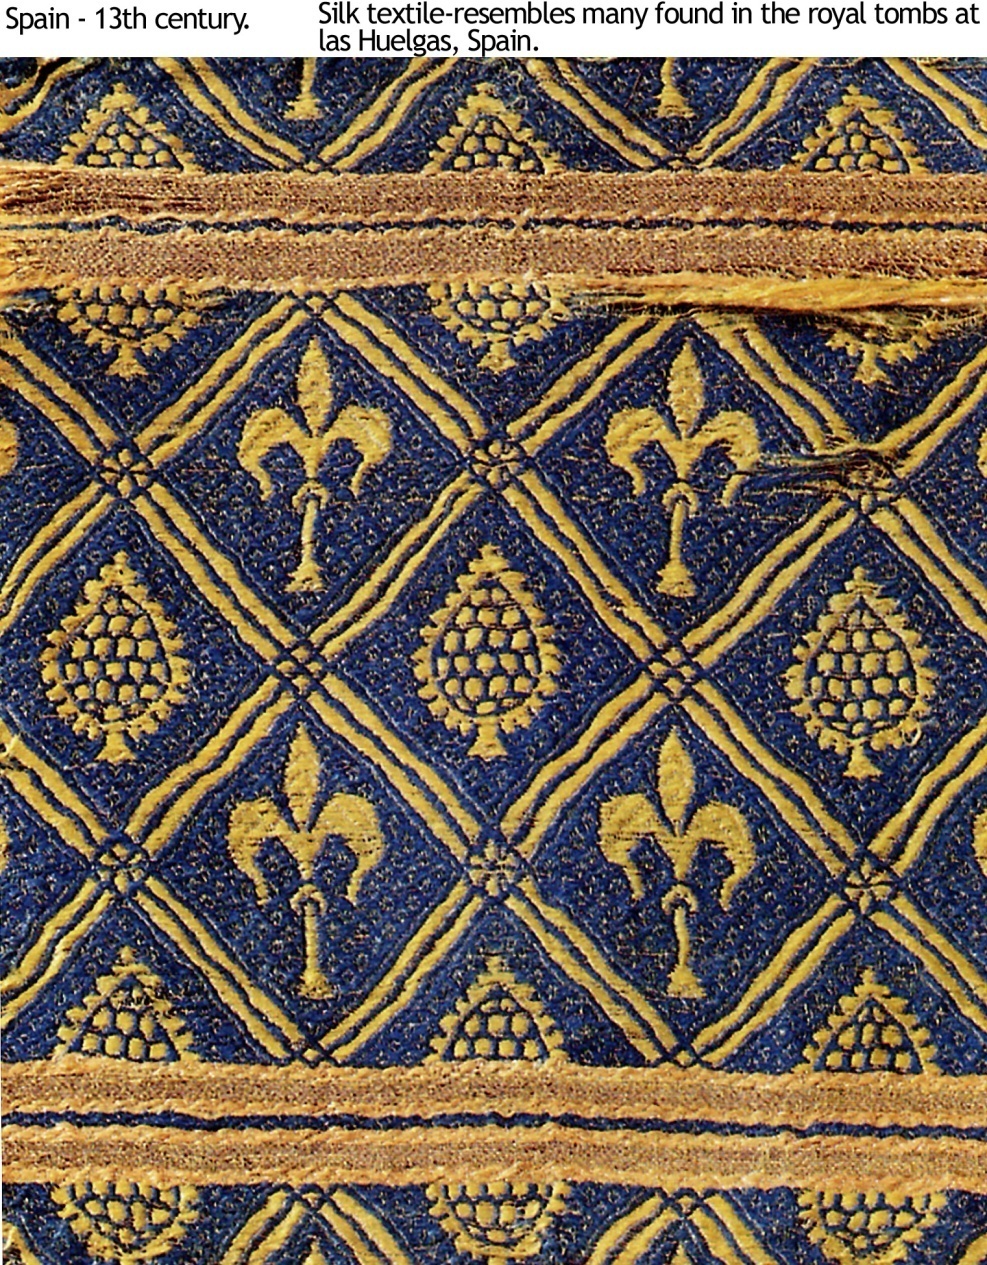 Spain-13th century-silk lorez